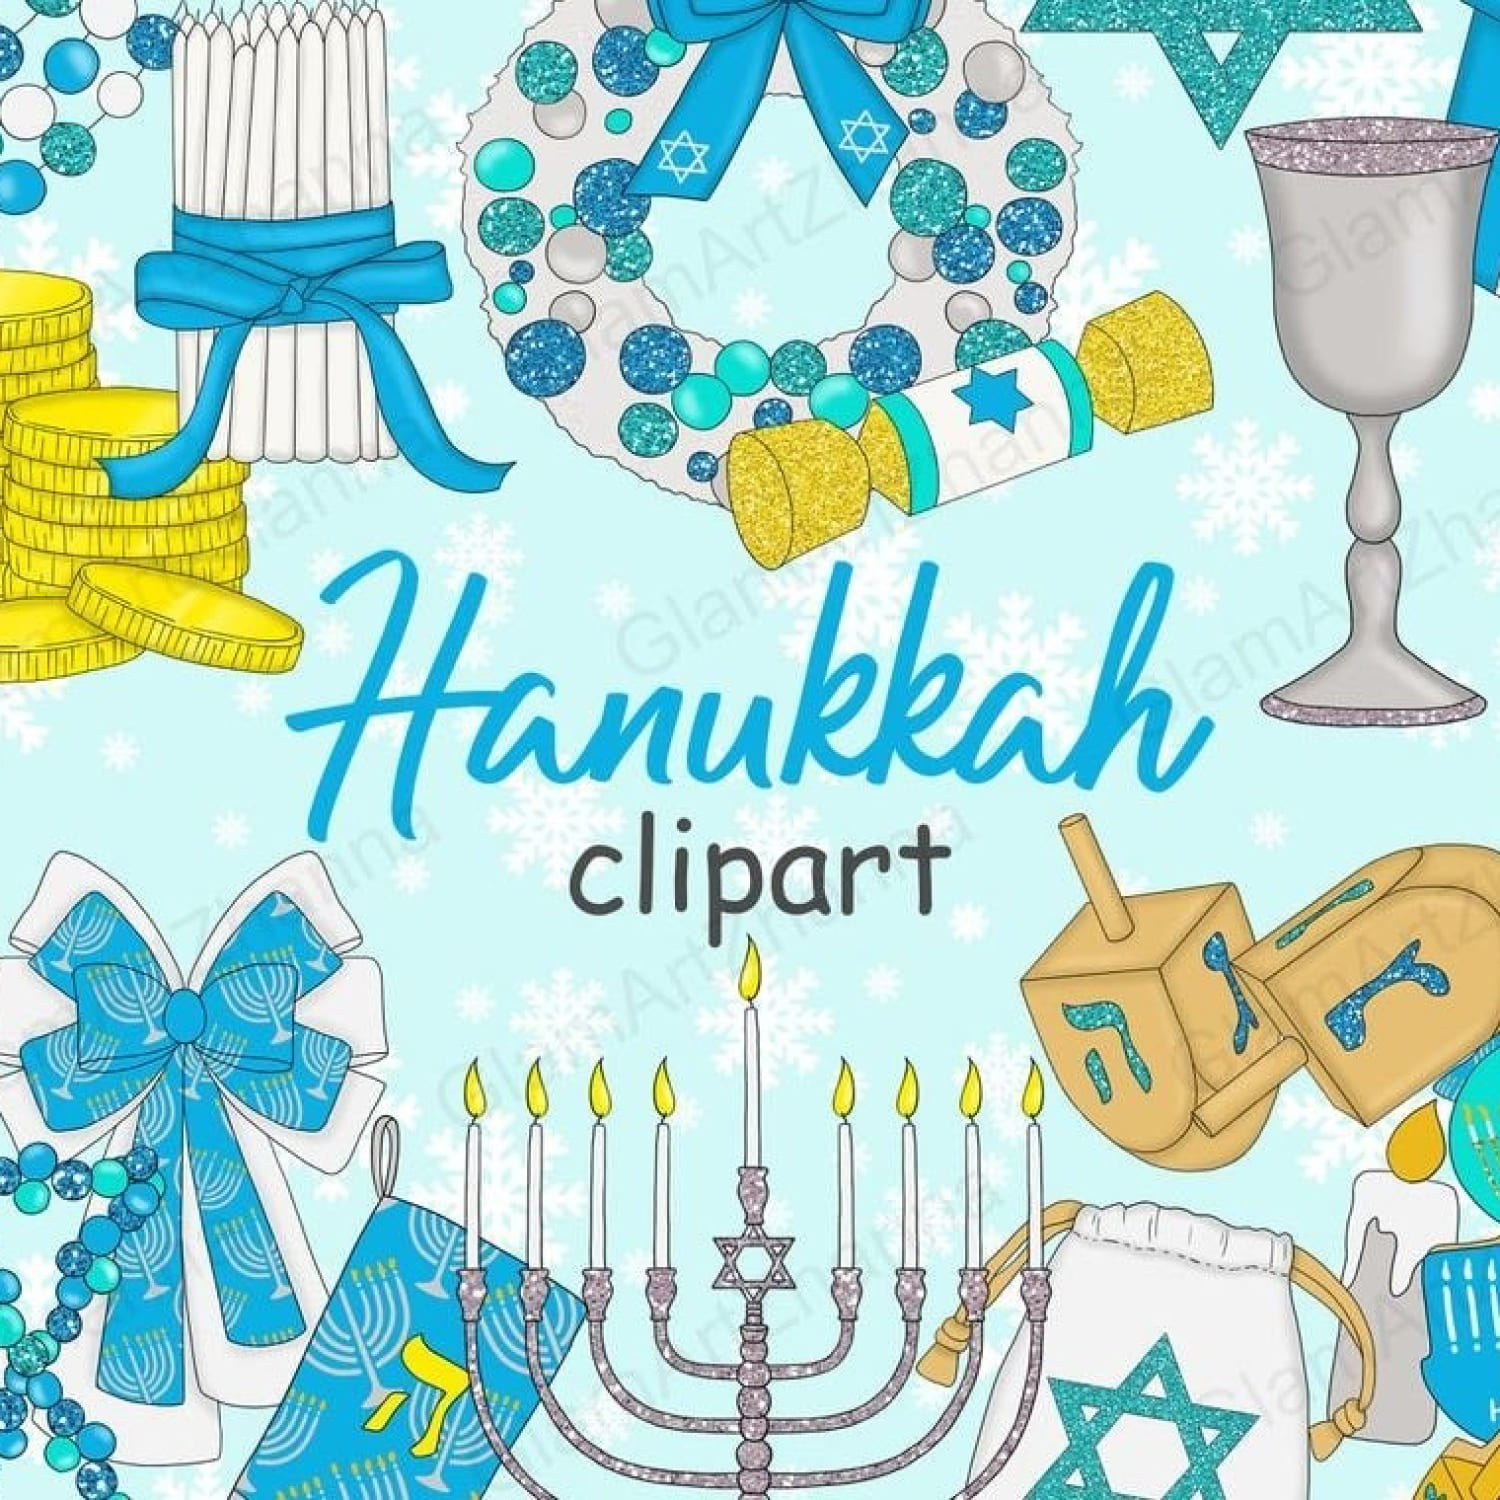 Prints of hanukkah clipart dreidel menorah.